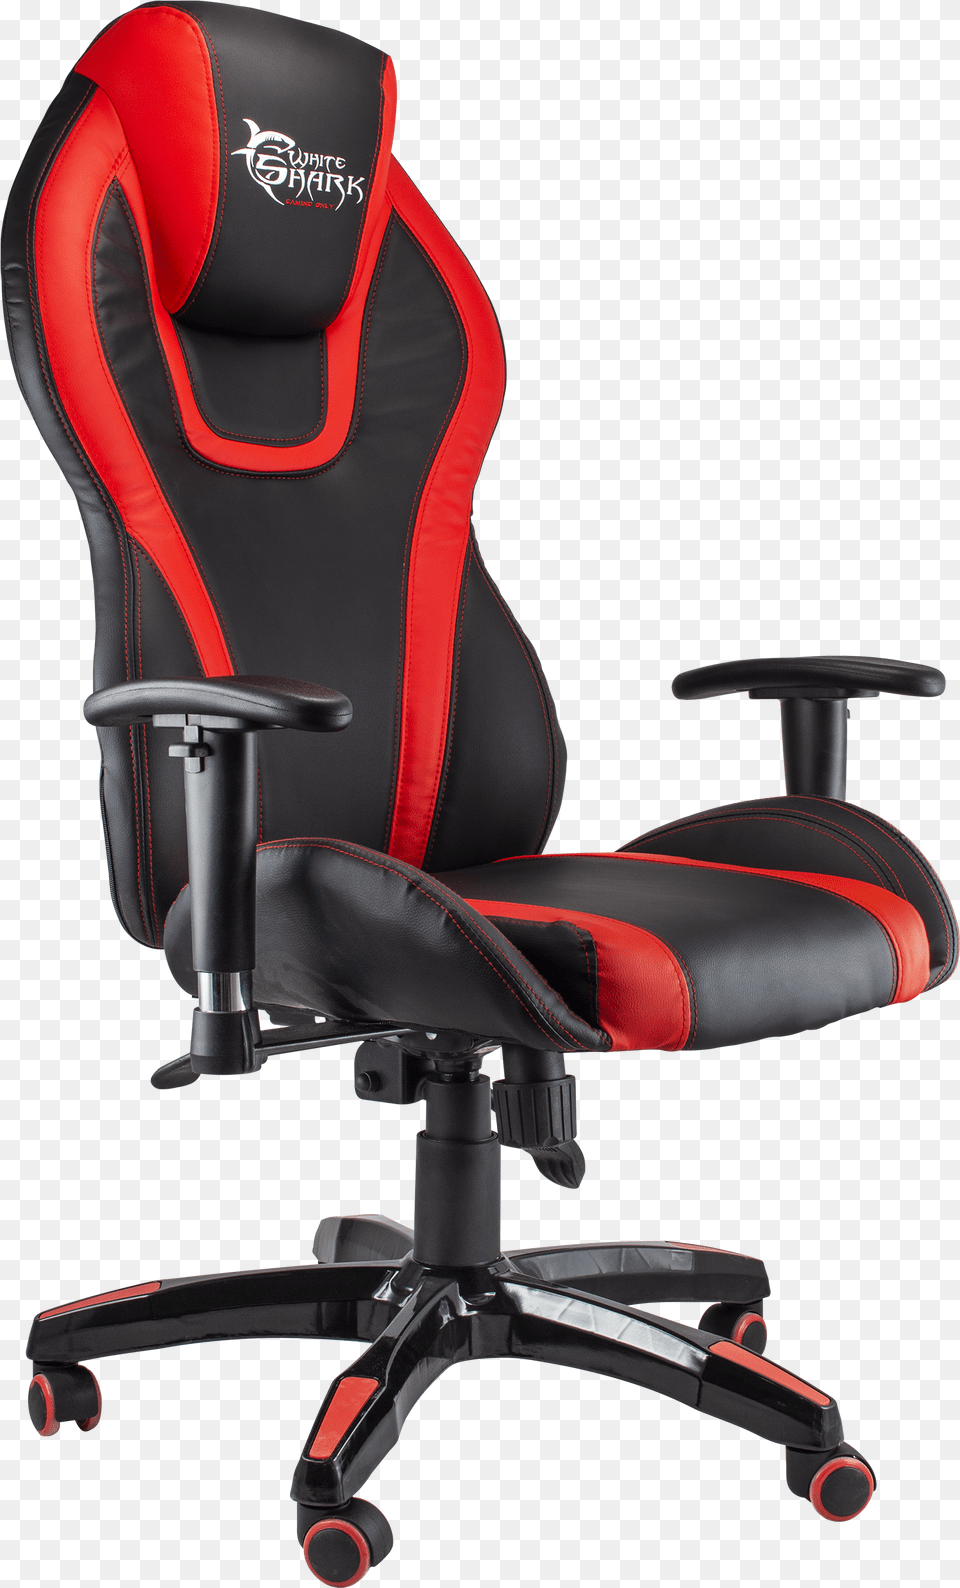 White Shark Gaming Chair Cobra Blackred, Cushion, Home Decor, Furniture, Headrest Free Transparent Png